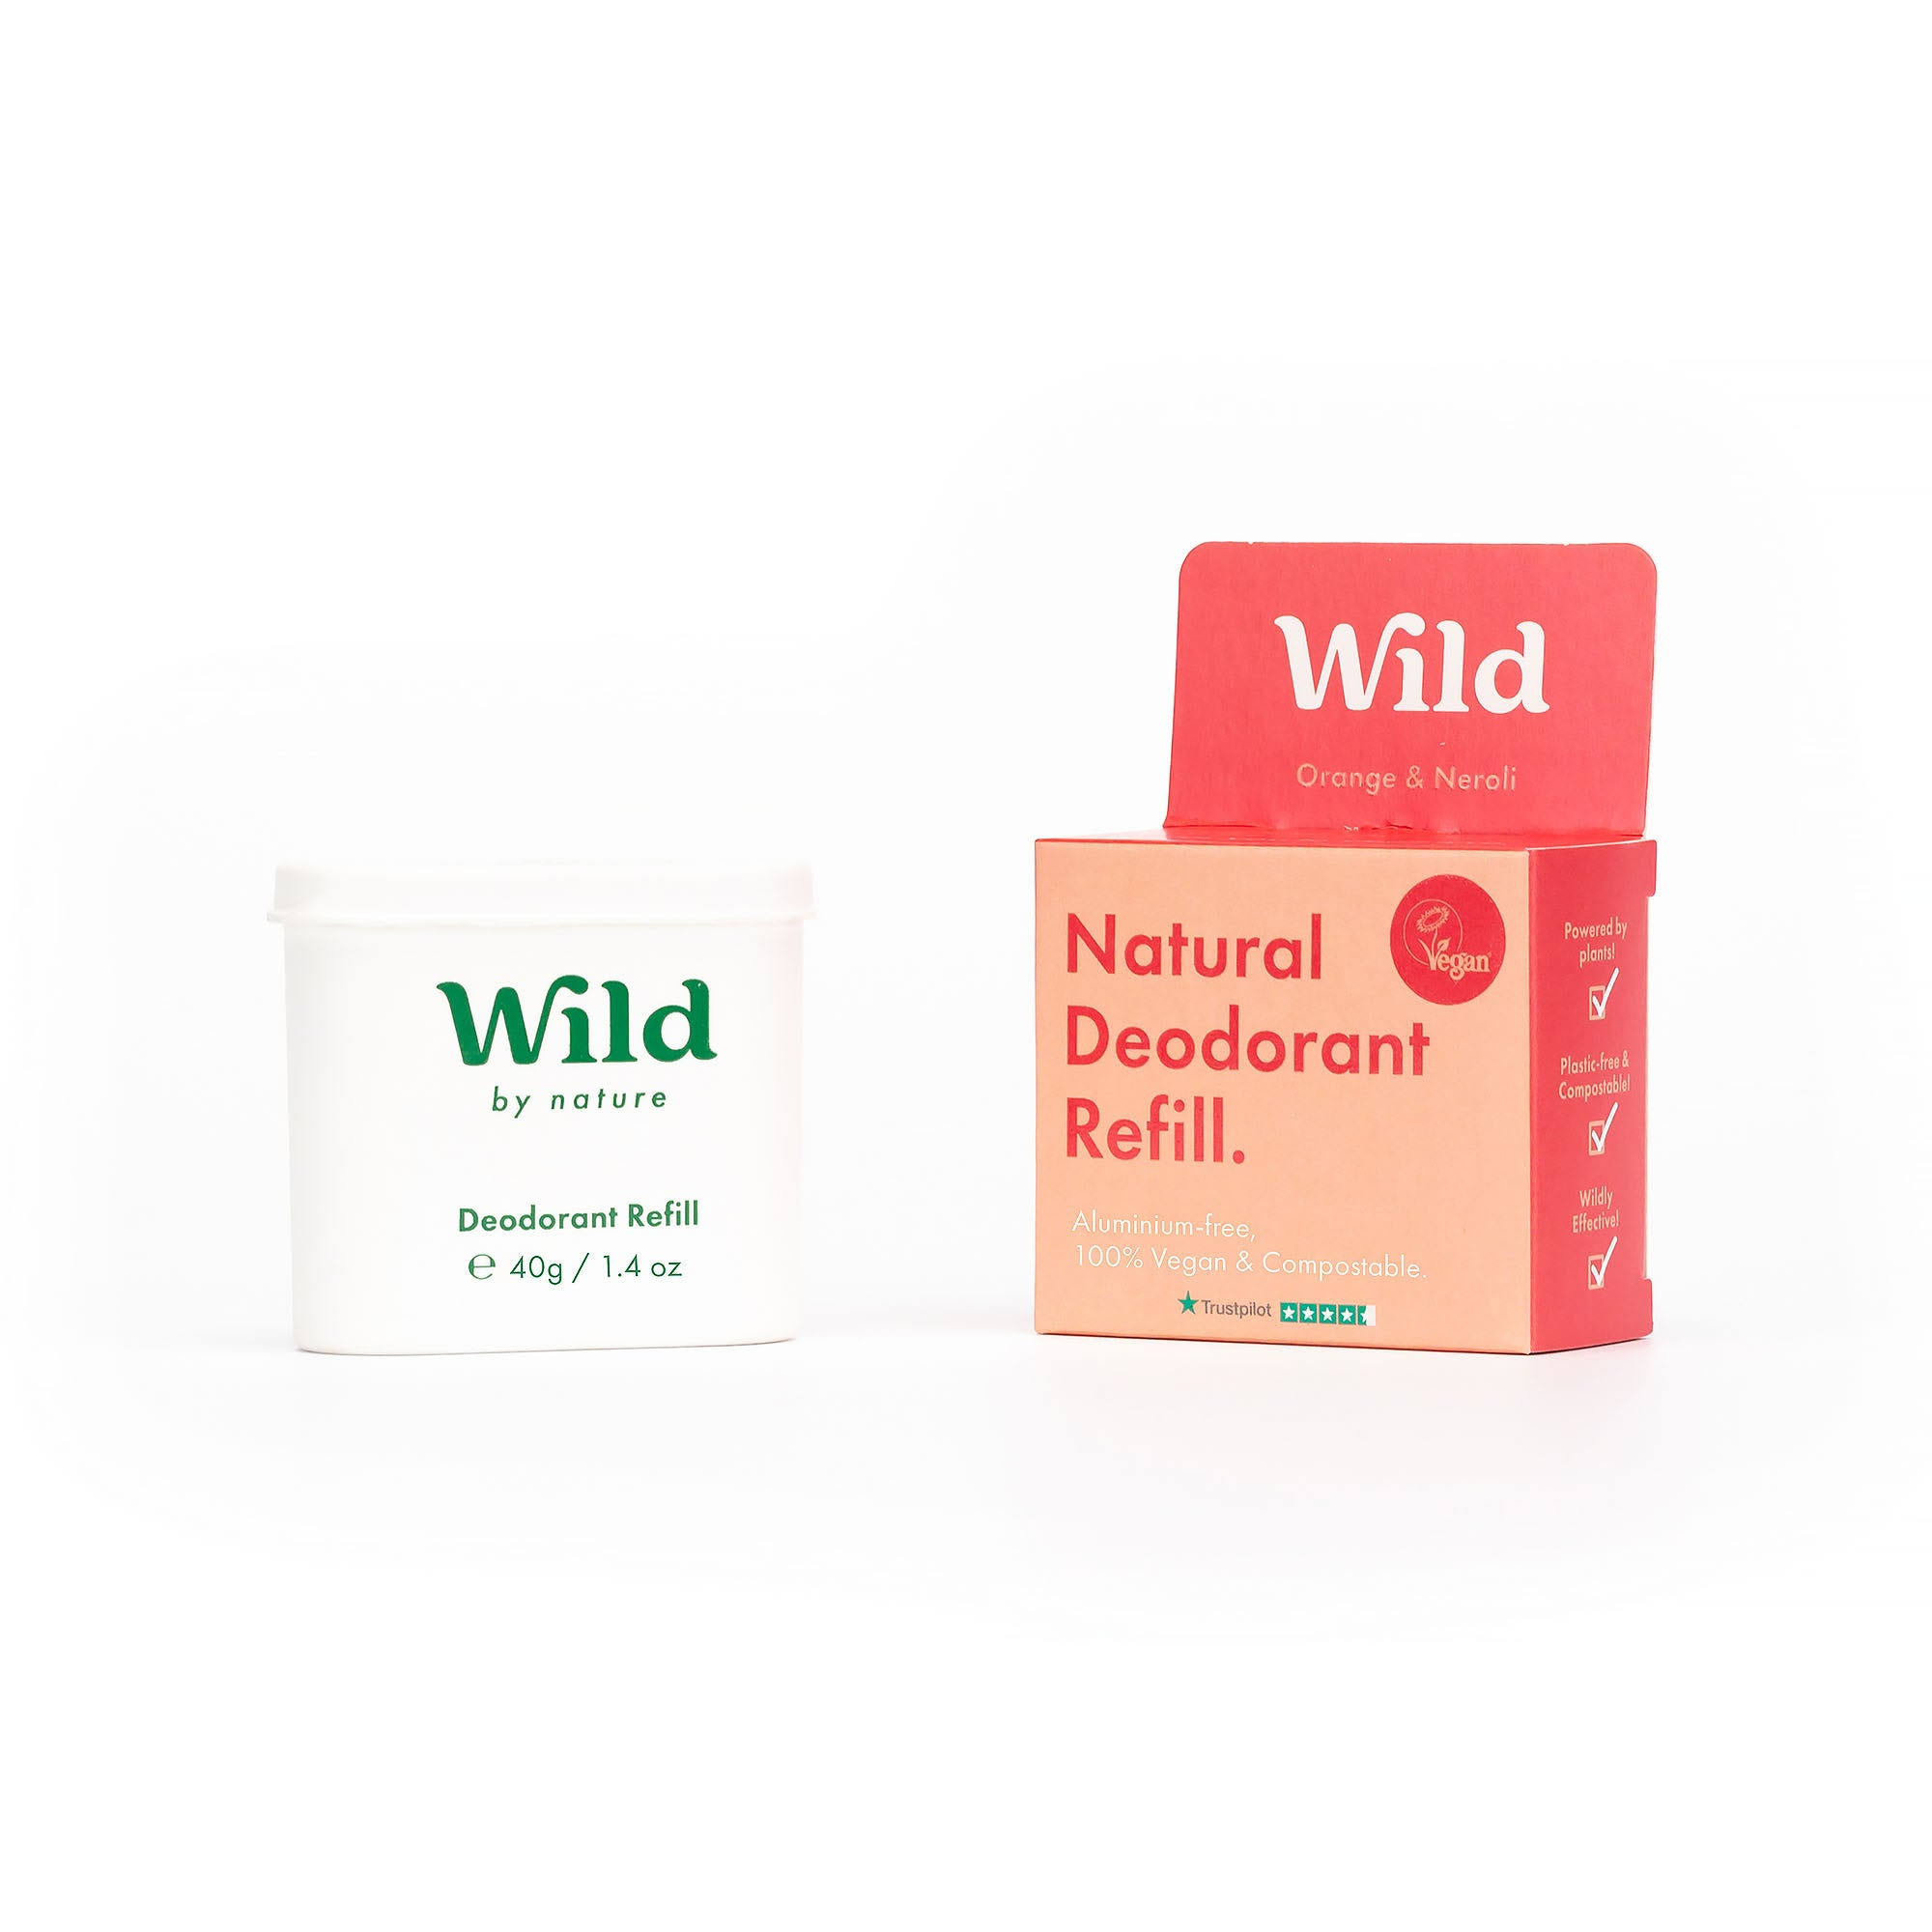 Wild Natural Deodorant Refill Orange & Neroli 40g